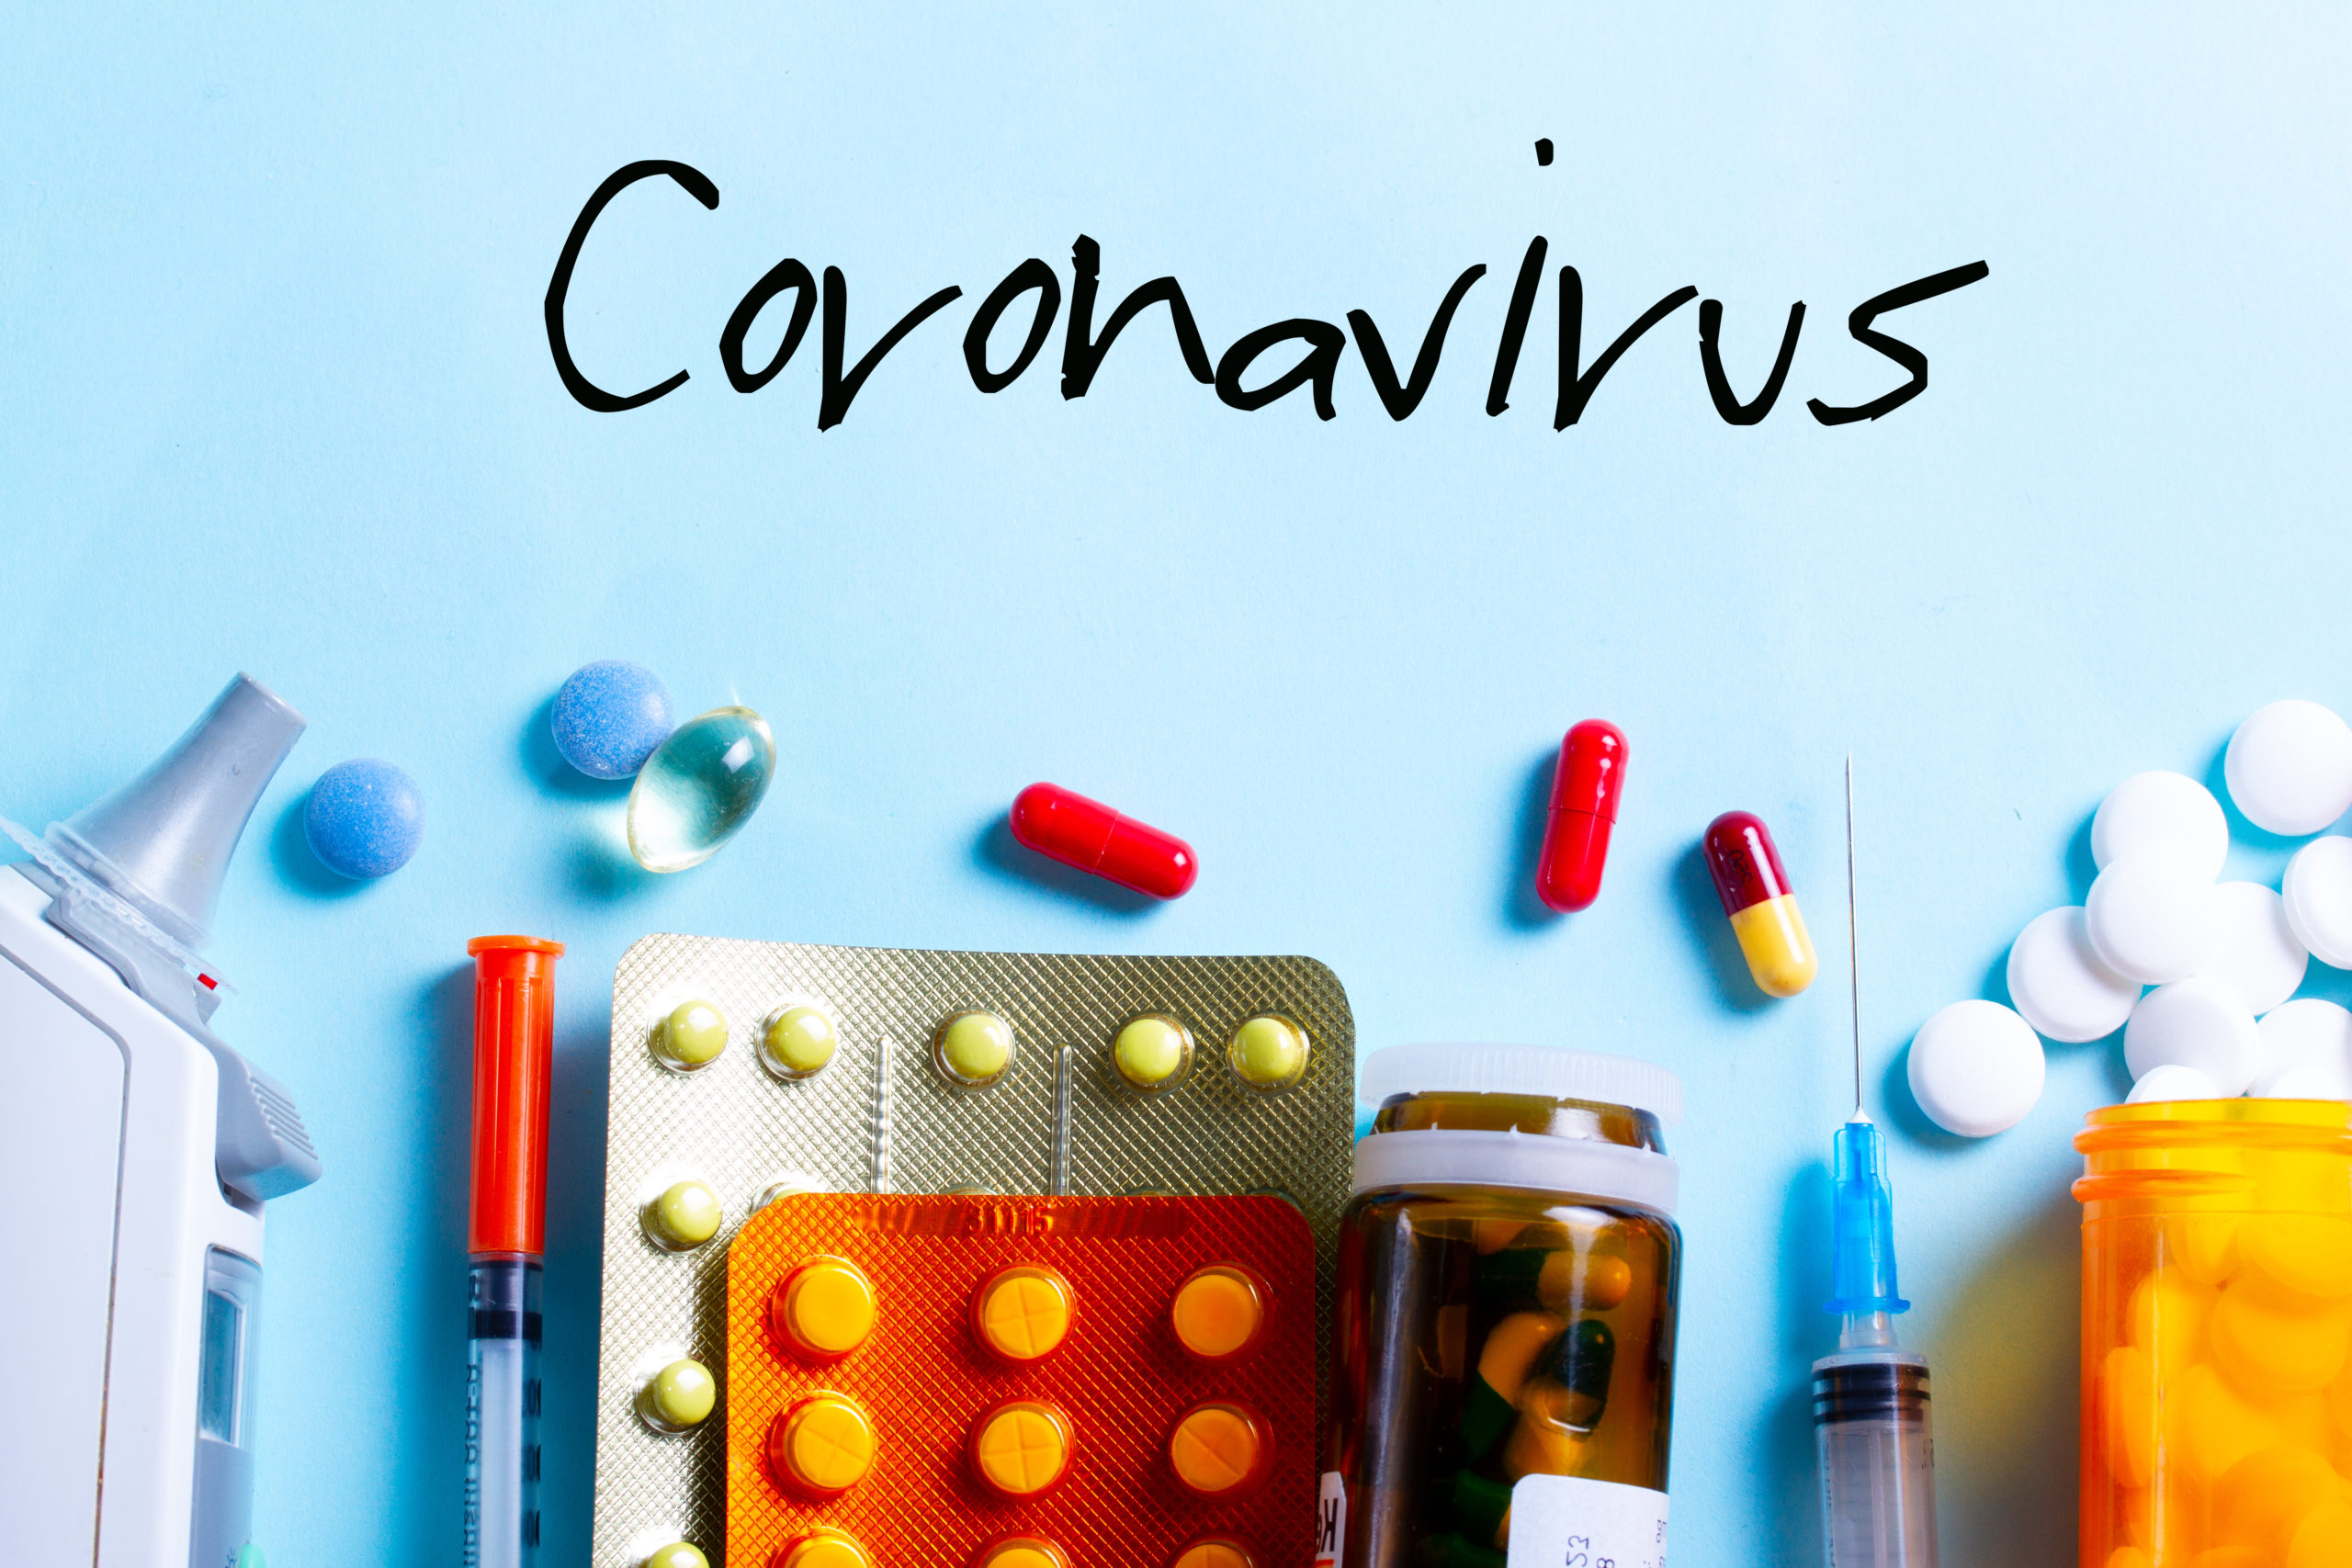 Coronavirus – Protecting our Community